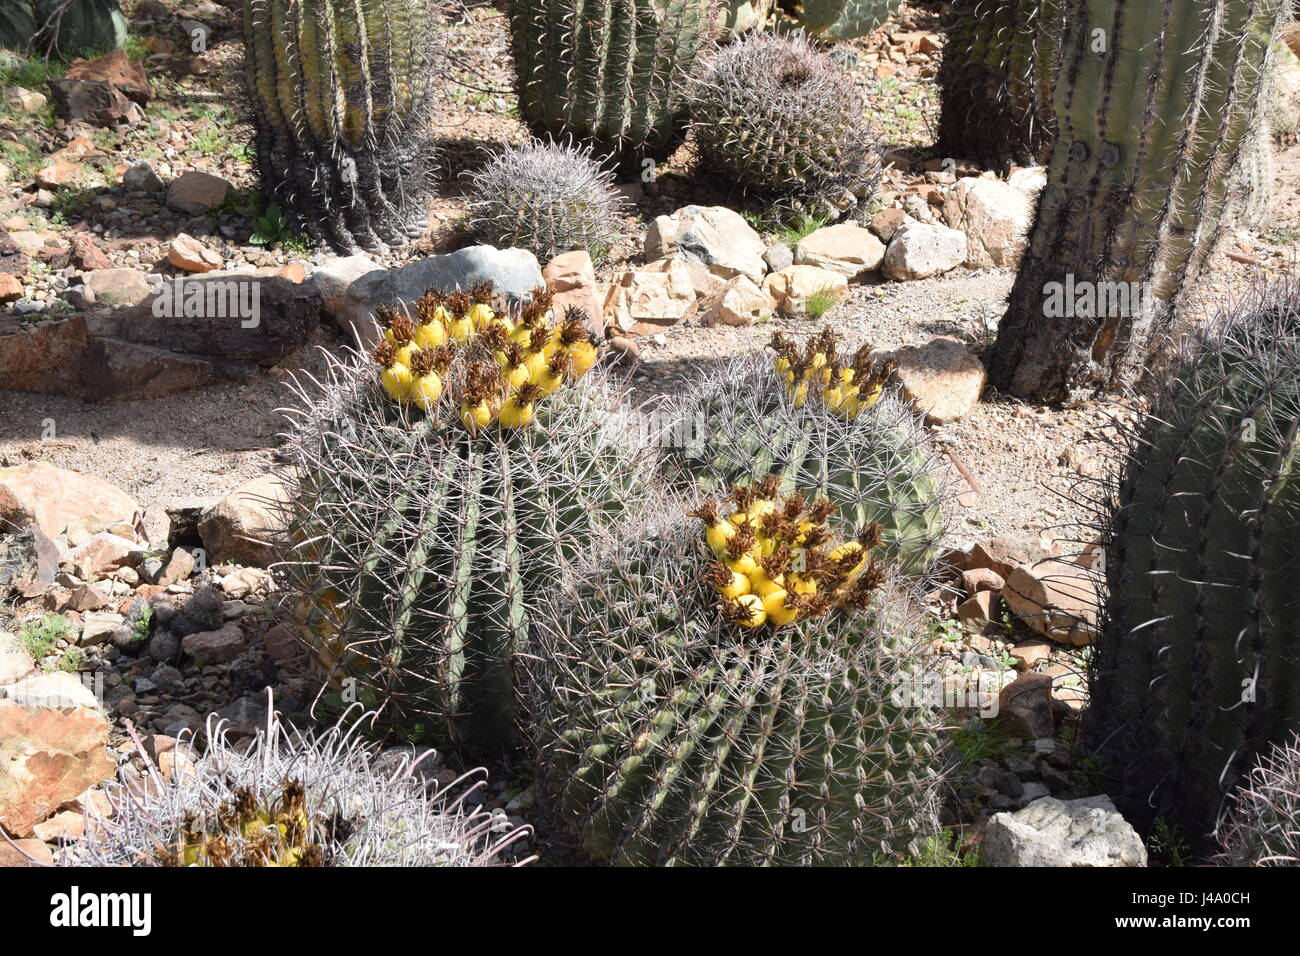 medium-sized cactus with yellow flowers Stock Photo